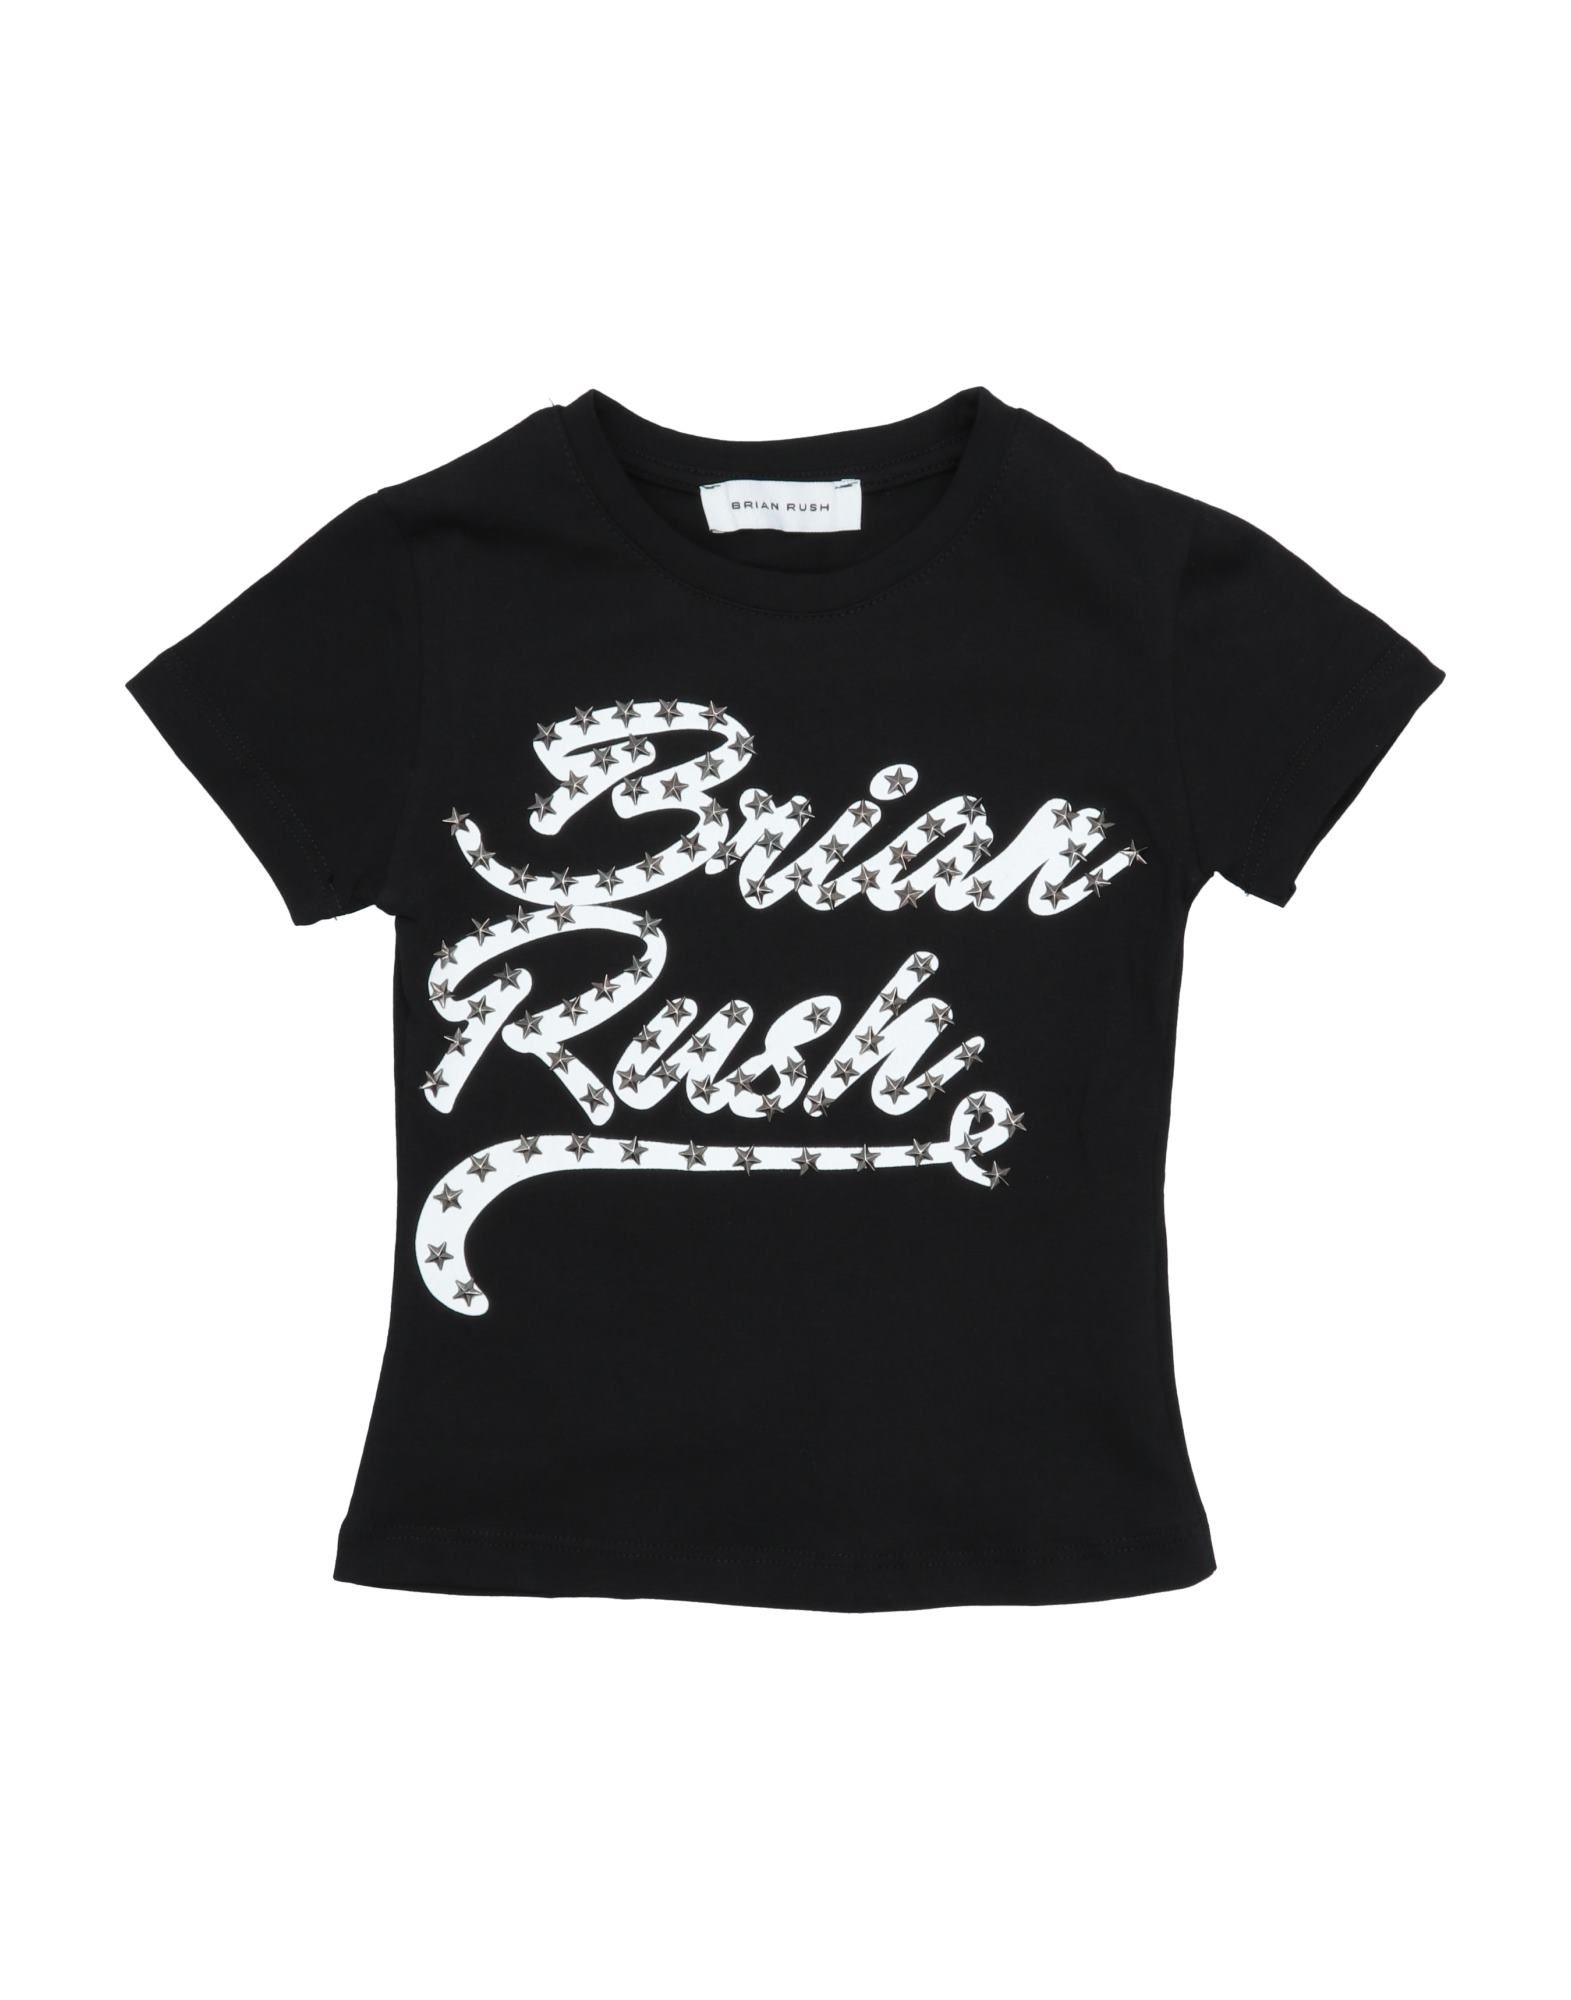 Brian Rush Kids' T-shirts In Black